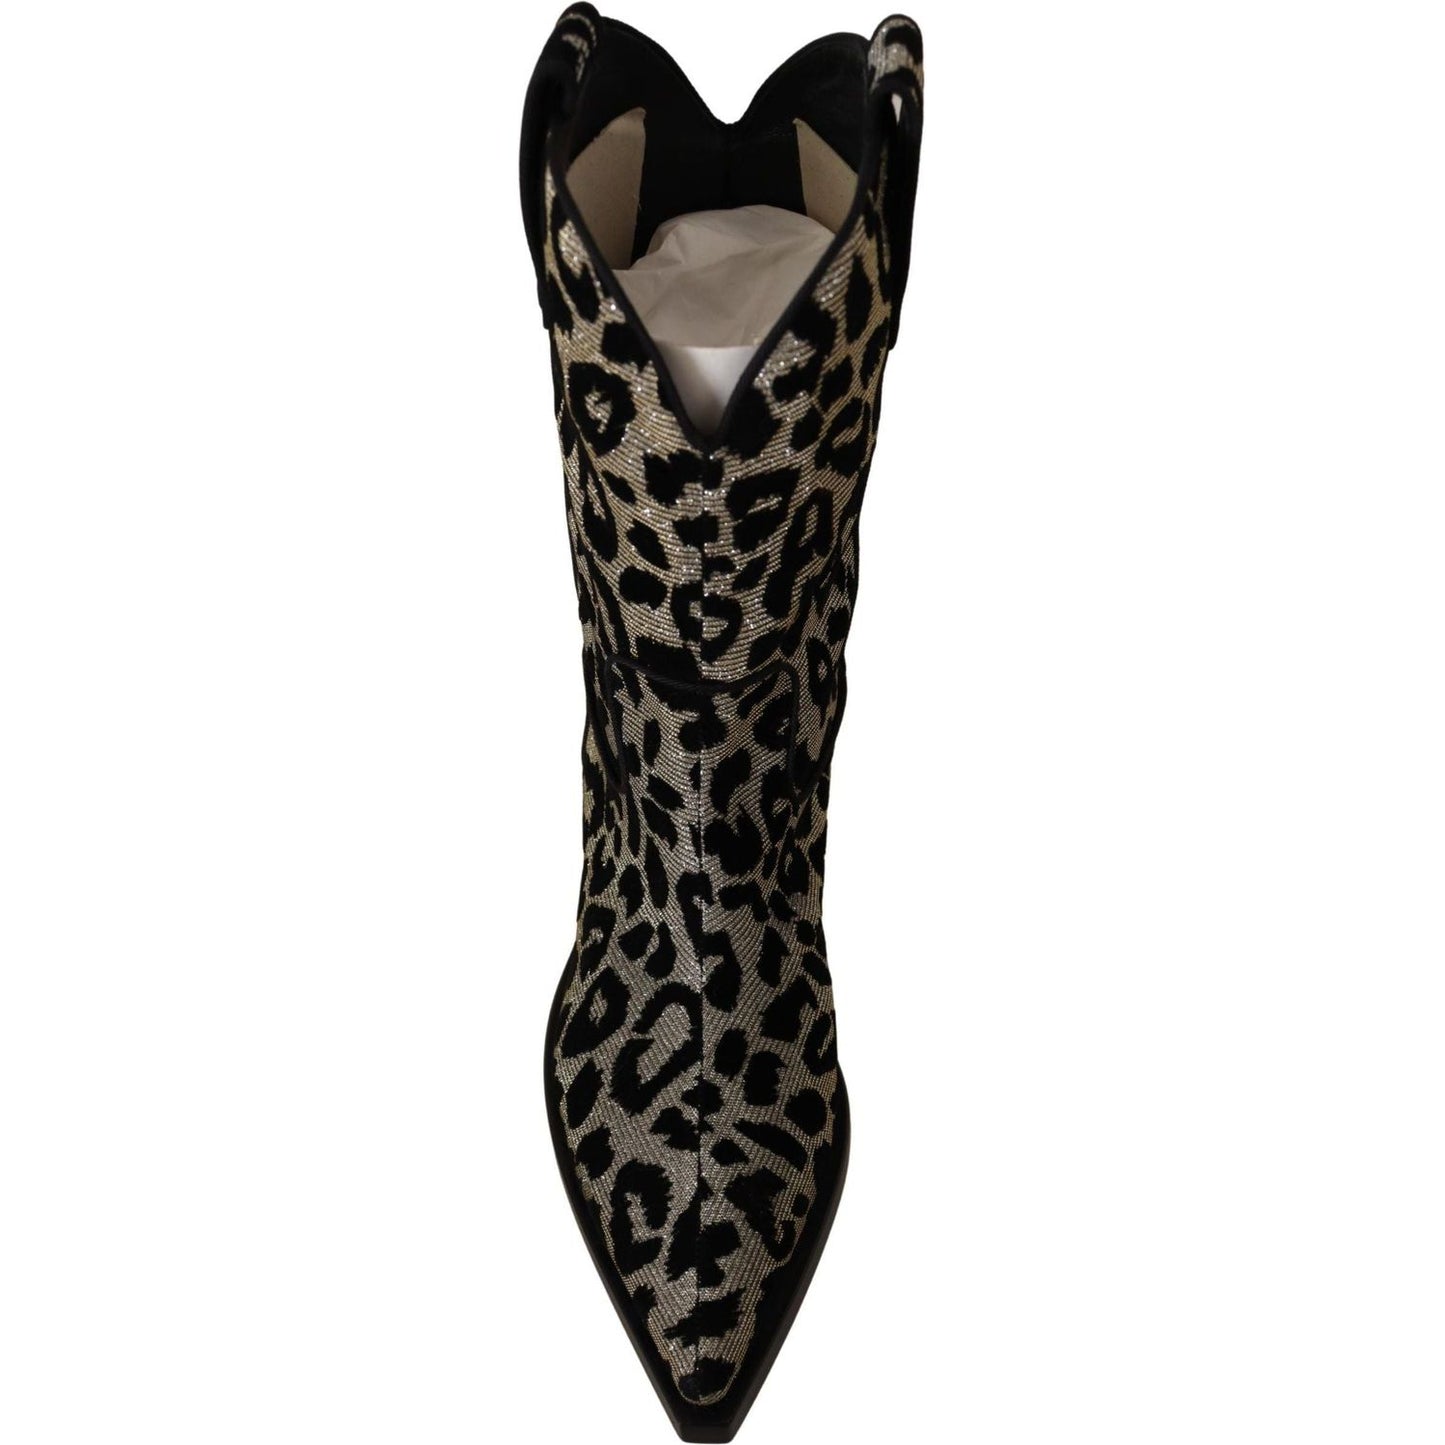 Dolce & Gabbana Elegant Leopard Print Mid Calf Boots gray-black-leopard-cowboy-boots-shoes IMG_6049-scaled-b884b242-8c1.jpg